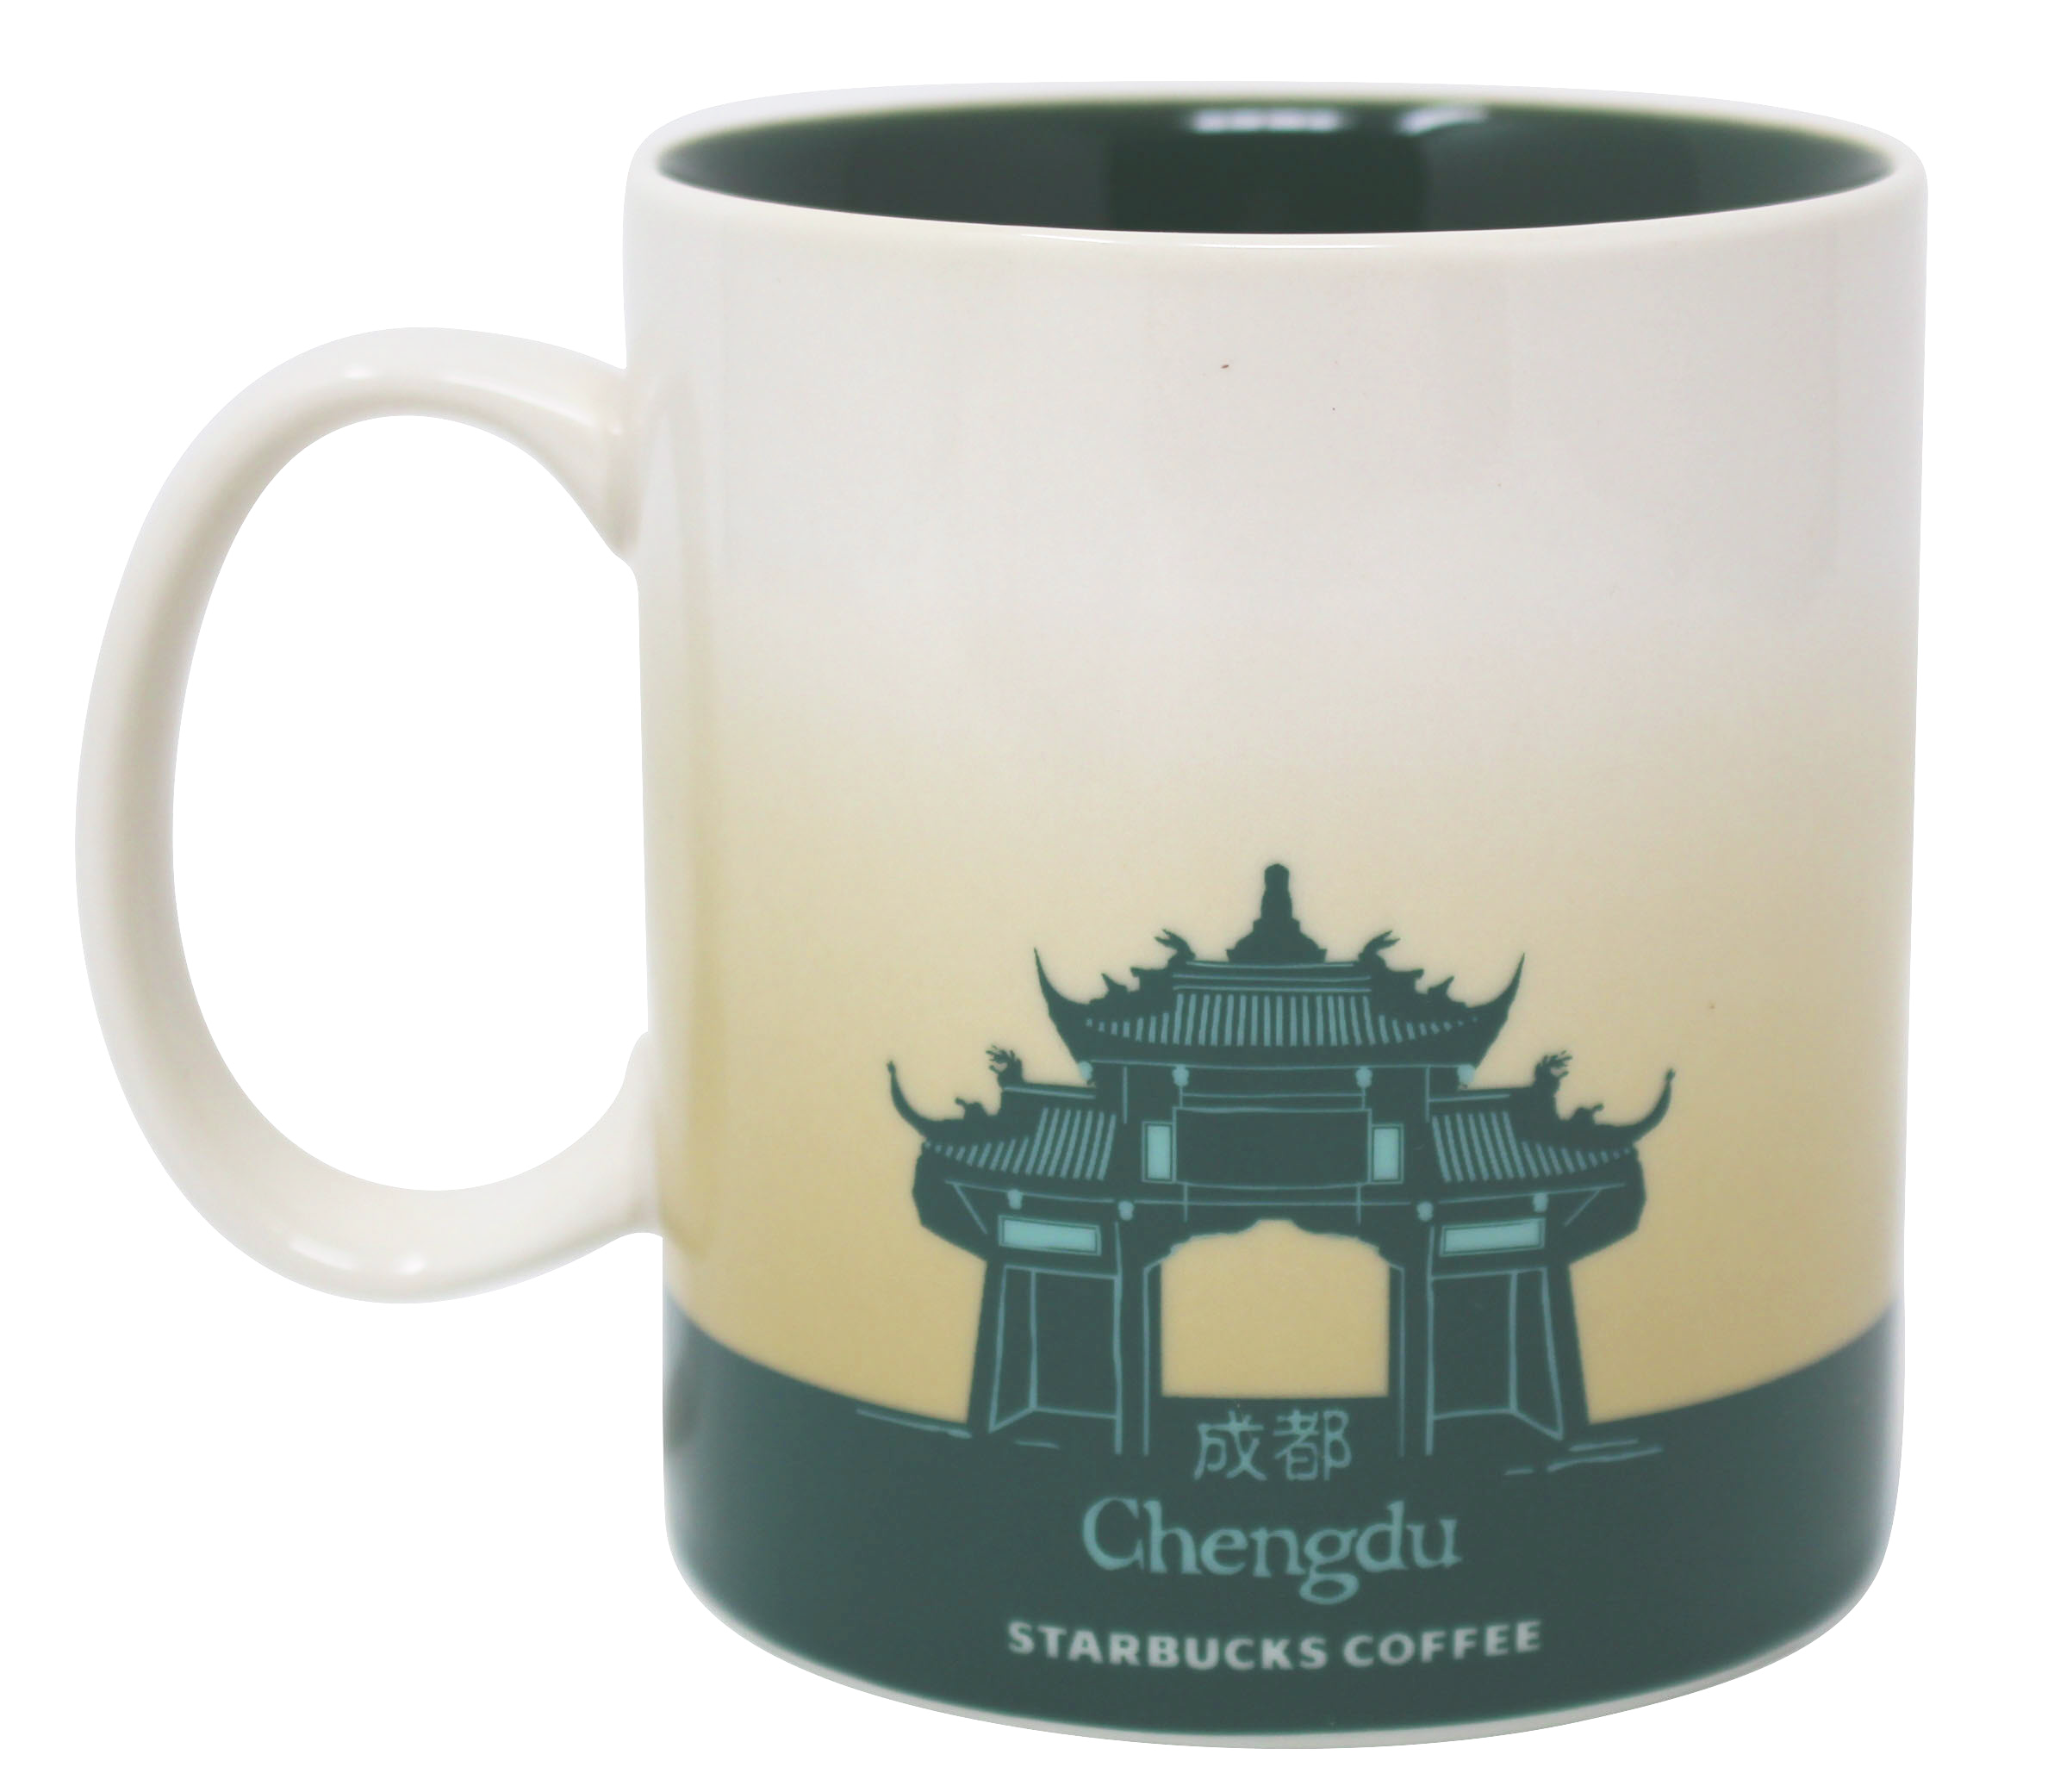 Starbucks Global Icon Series Chengdu Ceramic Mug, 16 Oz